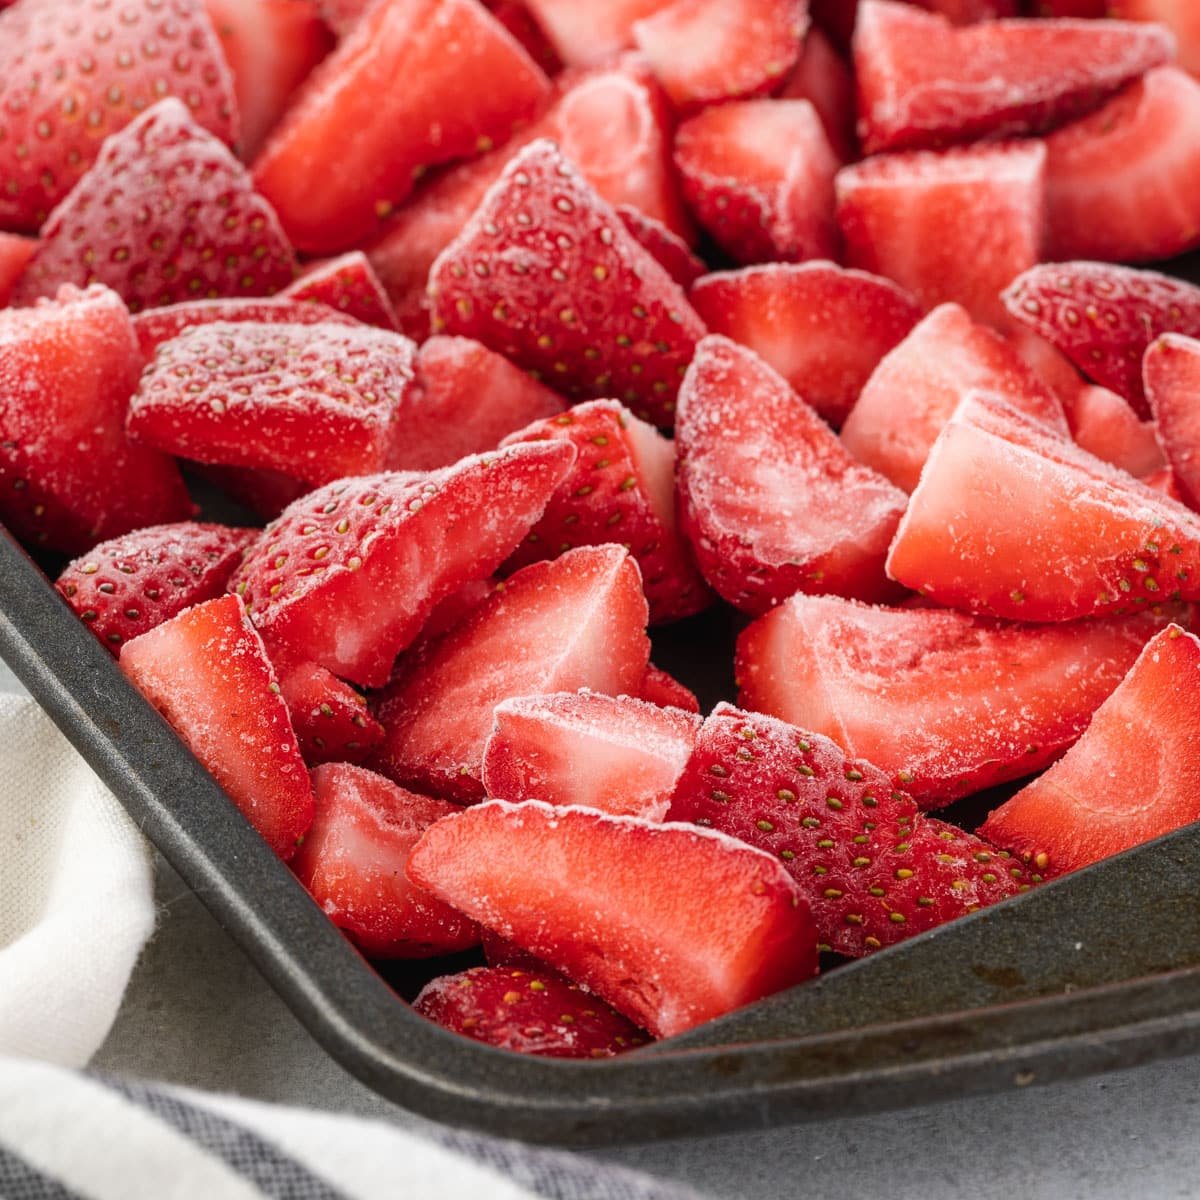 https://stateofdinner.com/wp-content/uploads/2022/07/frozen-strawberries-featured.jpg